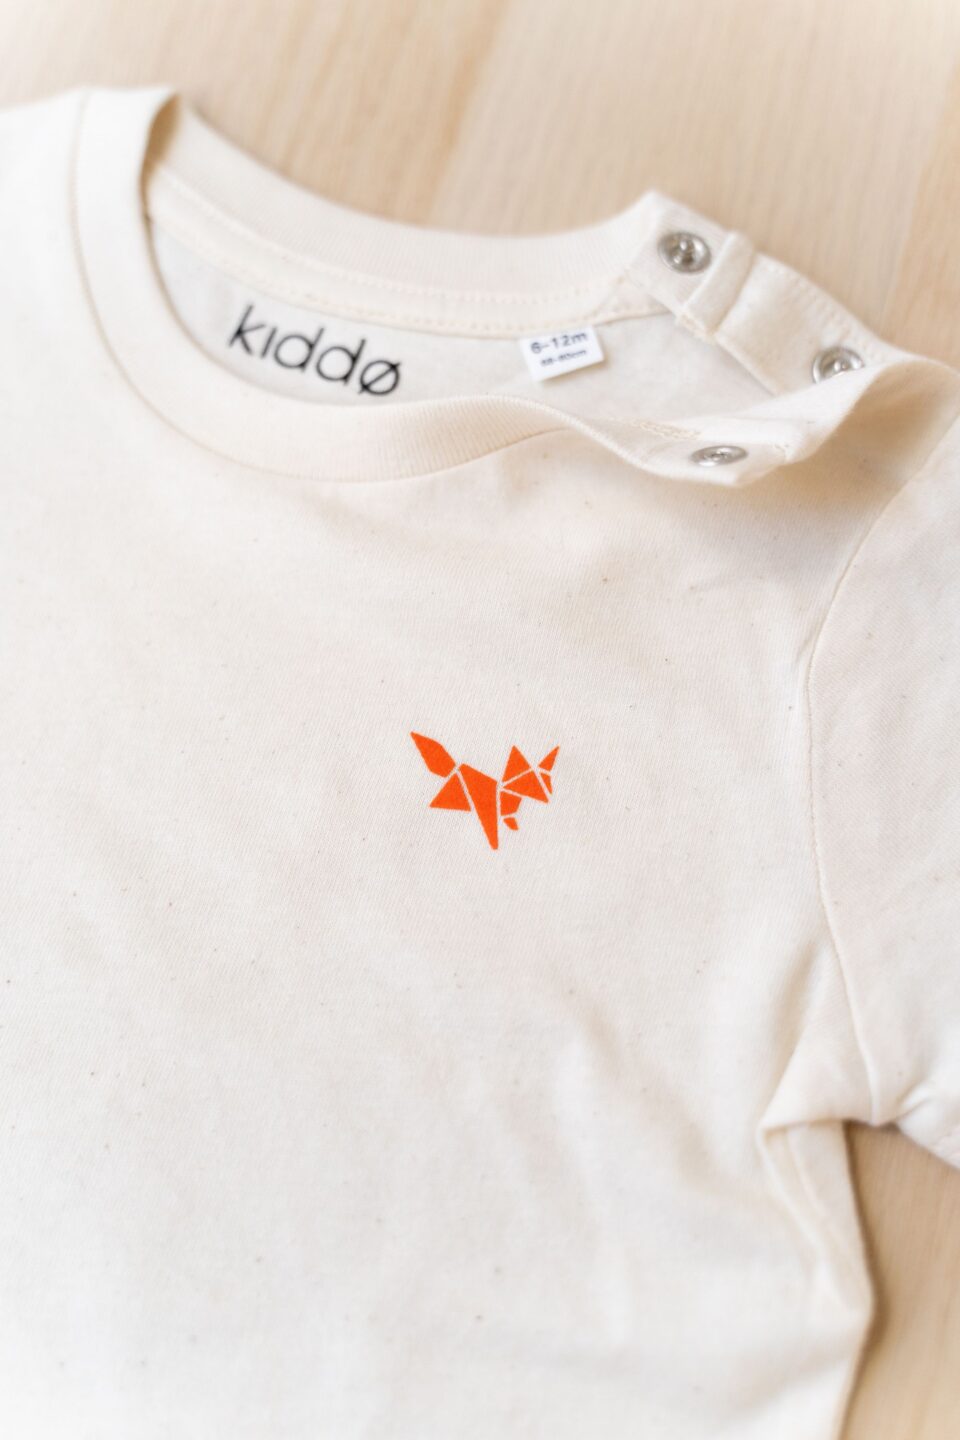 Kiddo_minimalist_kids shirt_children_natural raw_orange fox